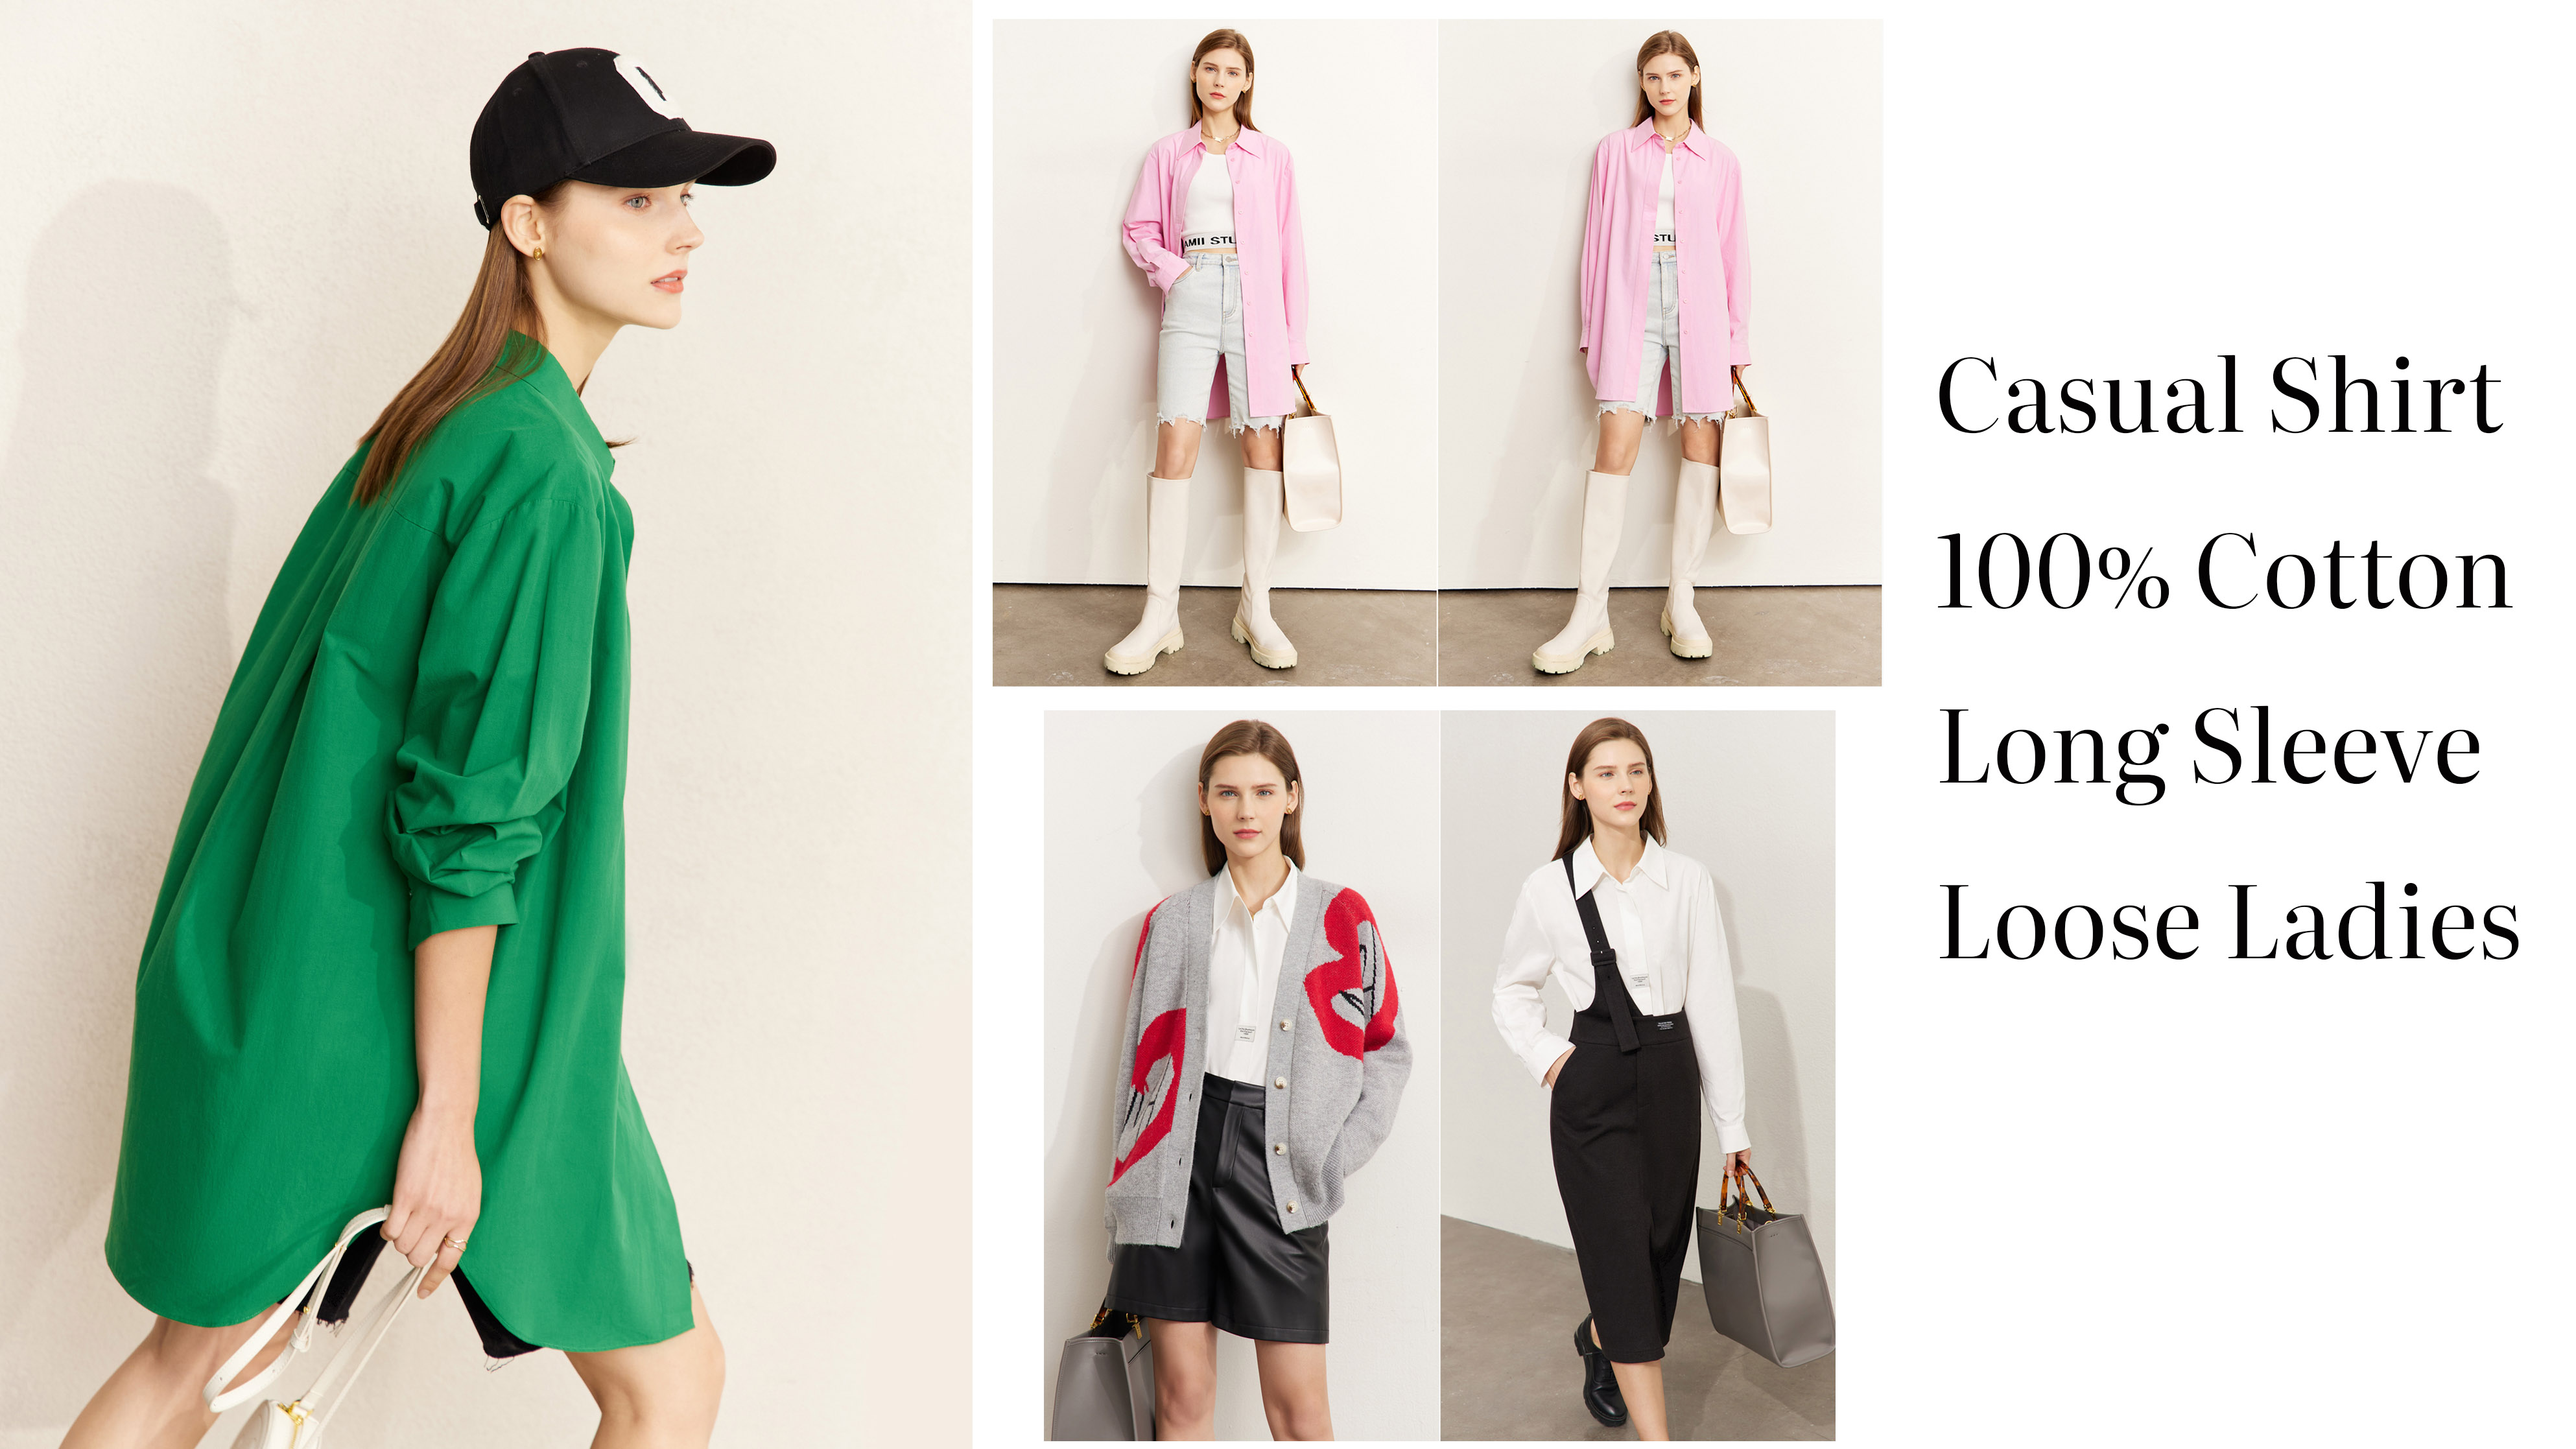 Camicia Casuale Personalizzata 100% Cotone Maniche Lunghe Loose Ladies manufacturers From China |Auschalink